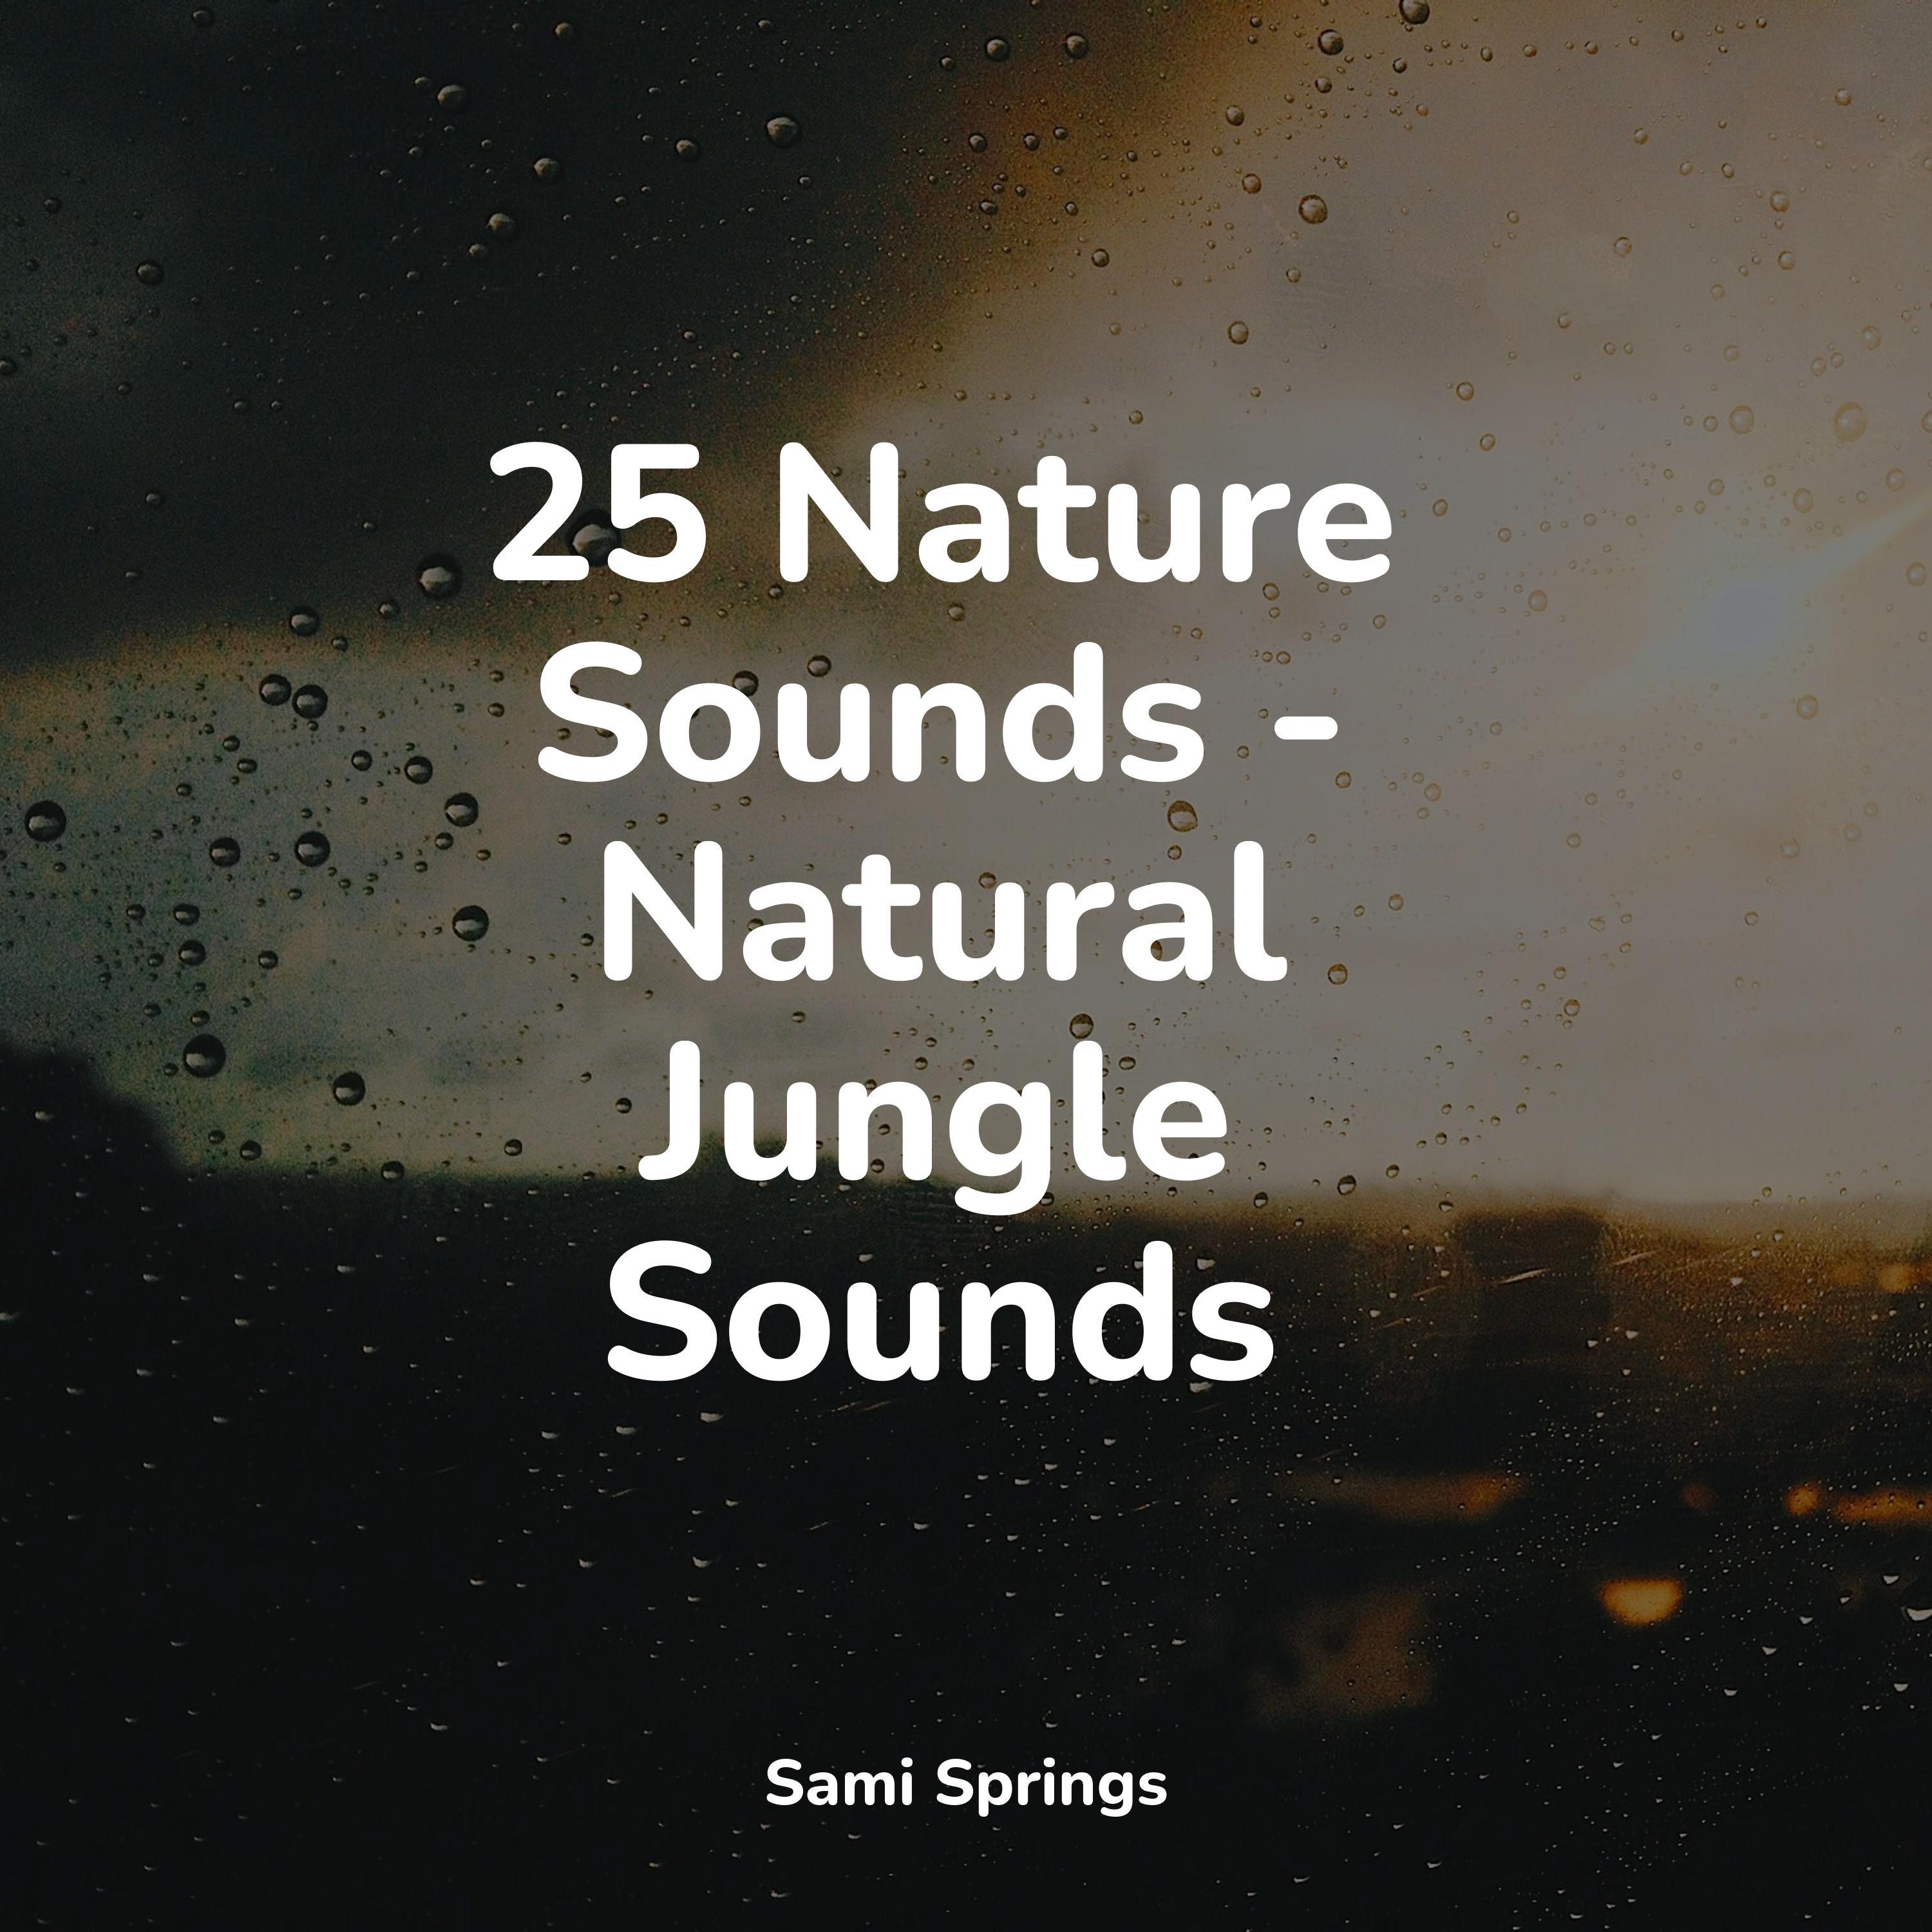 Calming Sounds - Wind, Strong, Forest, Light Debris, Leaves, Rain